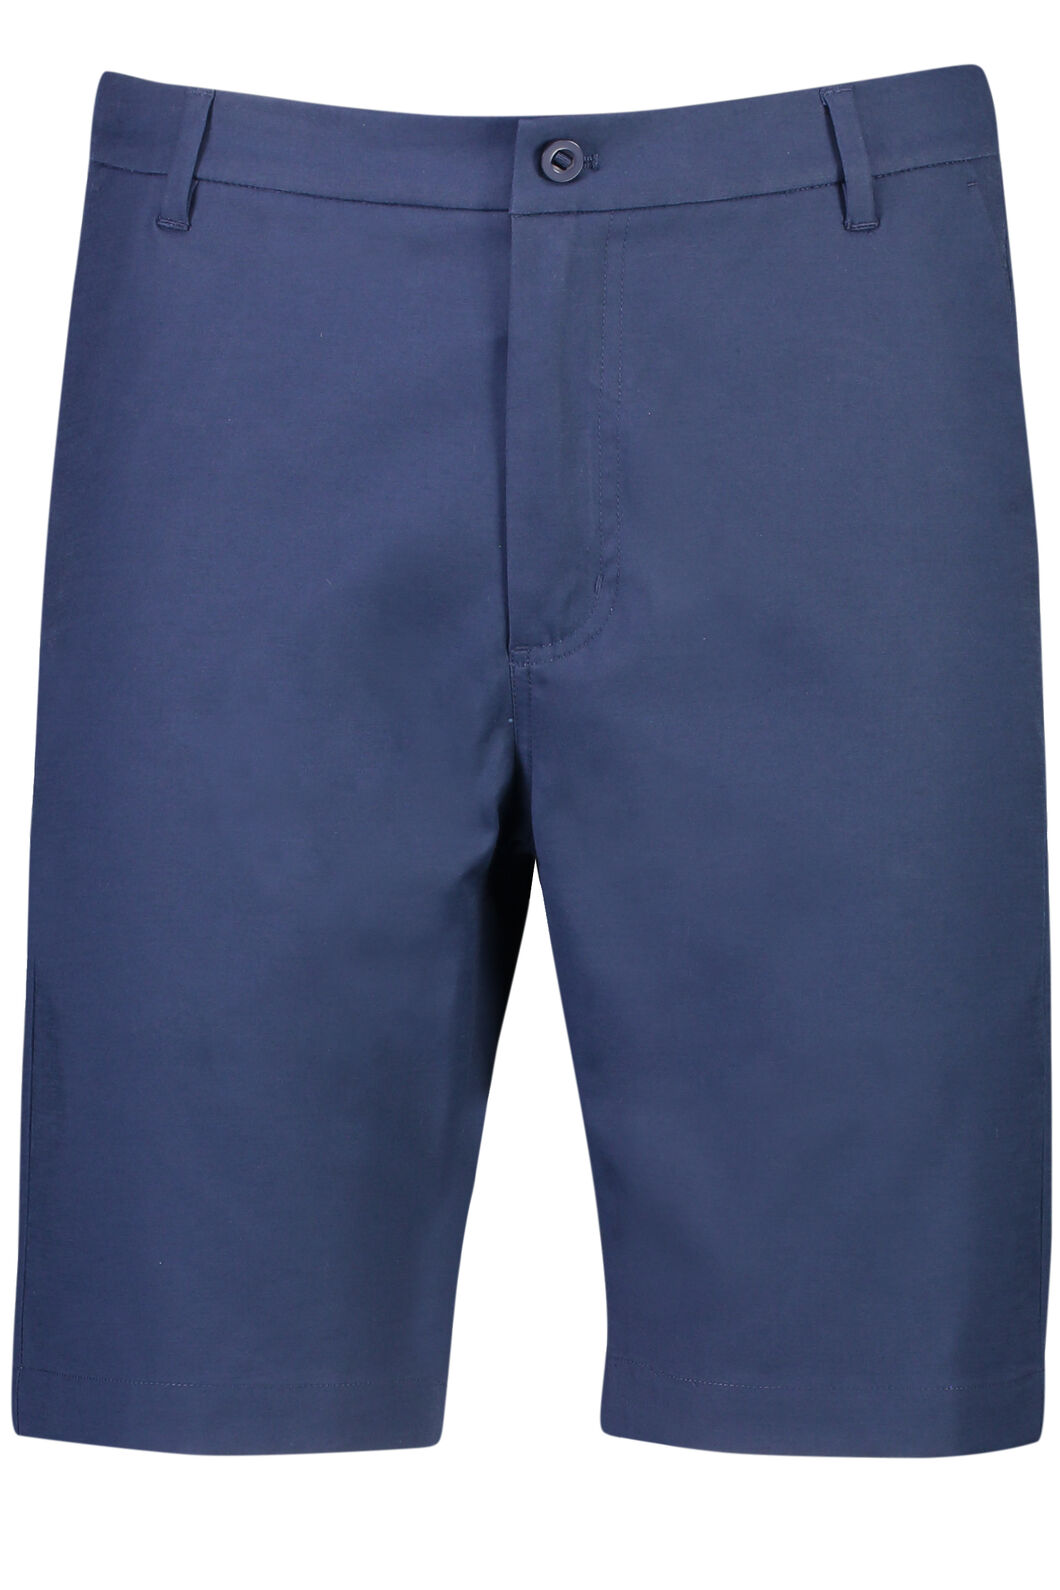 Macpac A-Z Shorts - Men's | Macpac